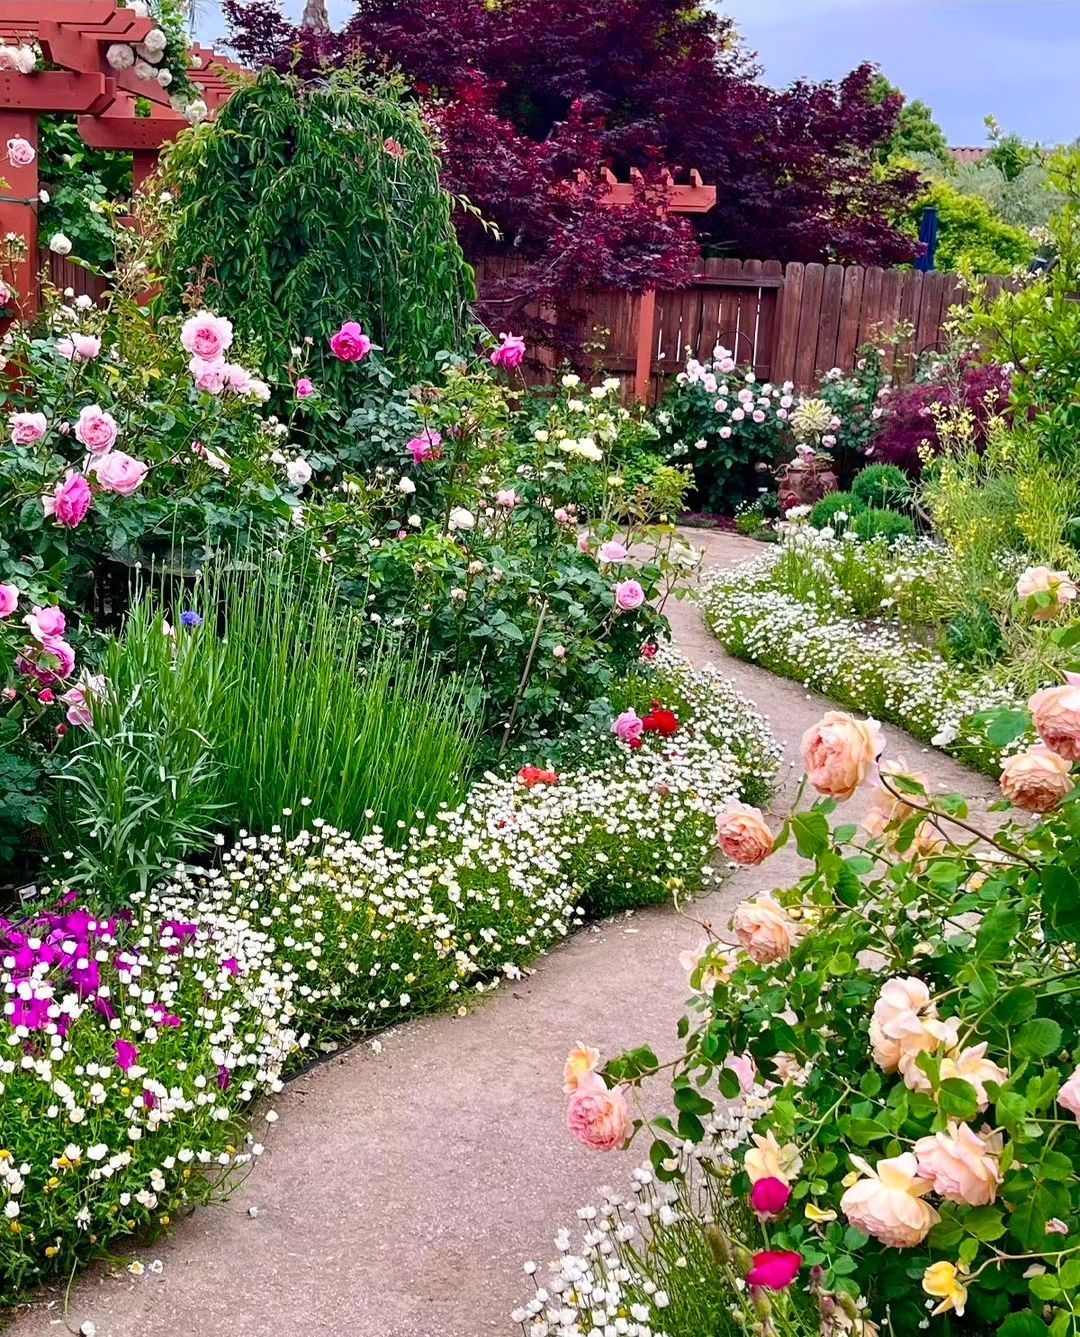 Creating Stunning Flower Garden Designs to Transform Your Outdoor Space